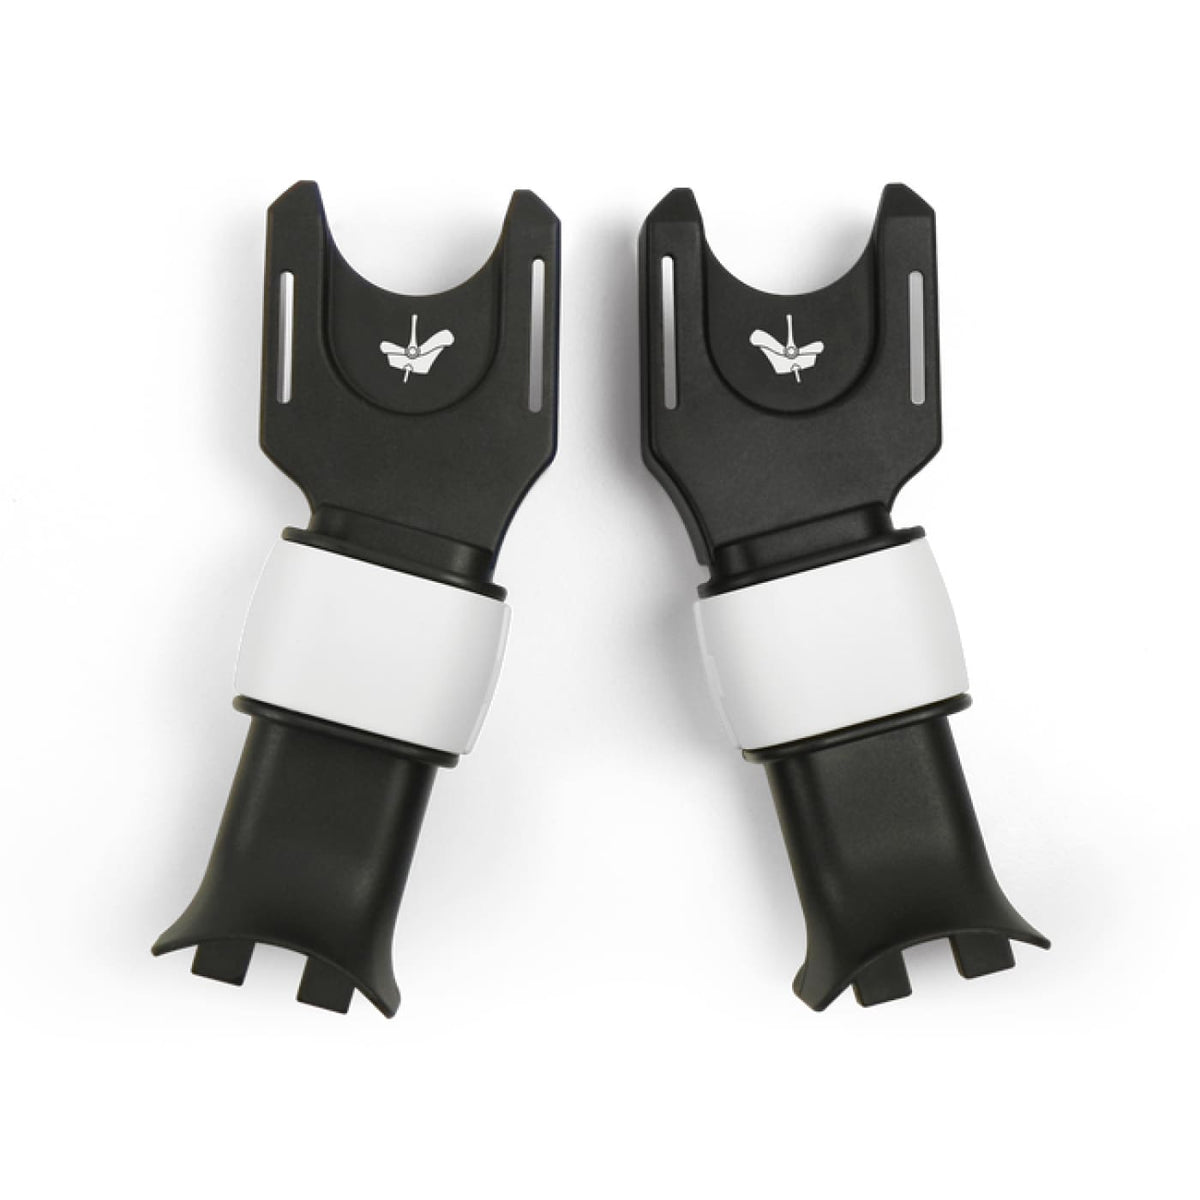 Bugaboo Cameleon3 Adaptor for MAXI COSI car seat - PRAMS &amp; STROLLERS - ADAPTORS FOR TRAV SYS